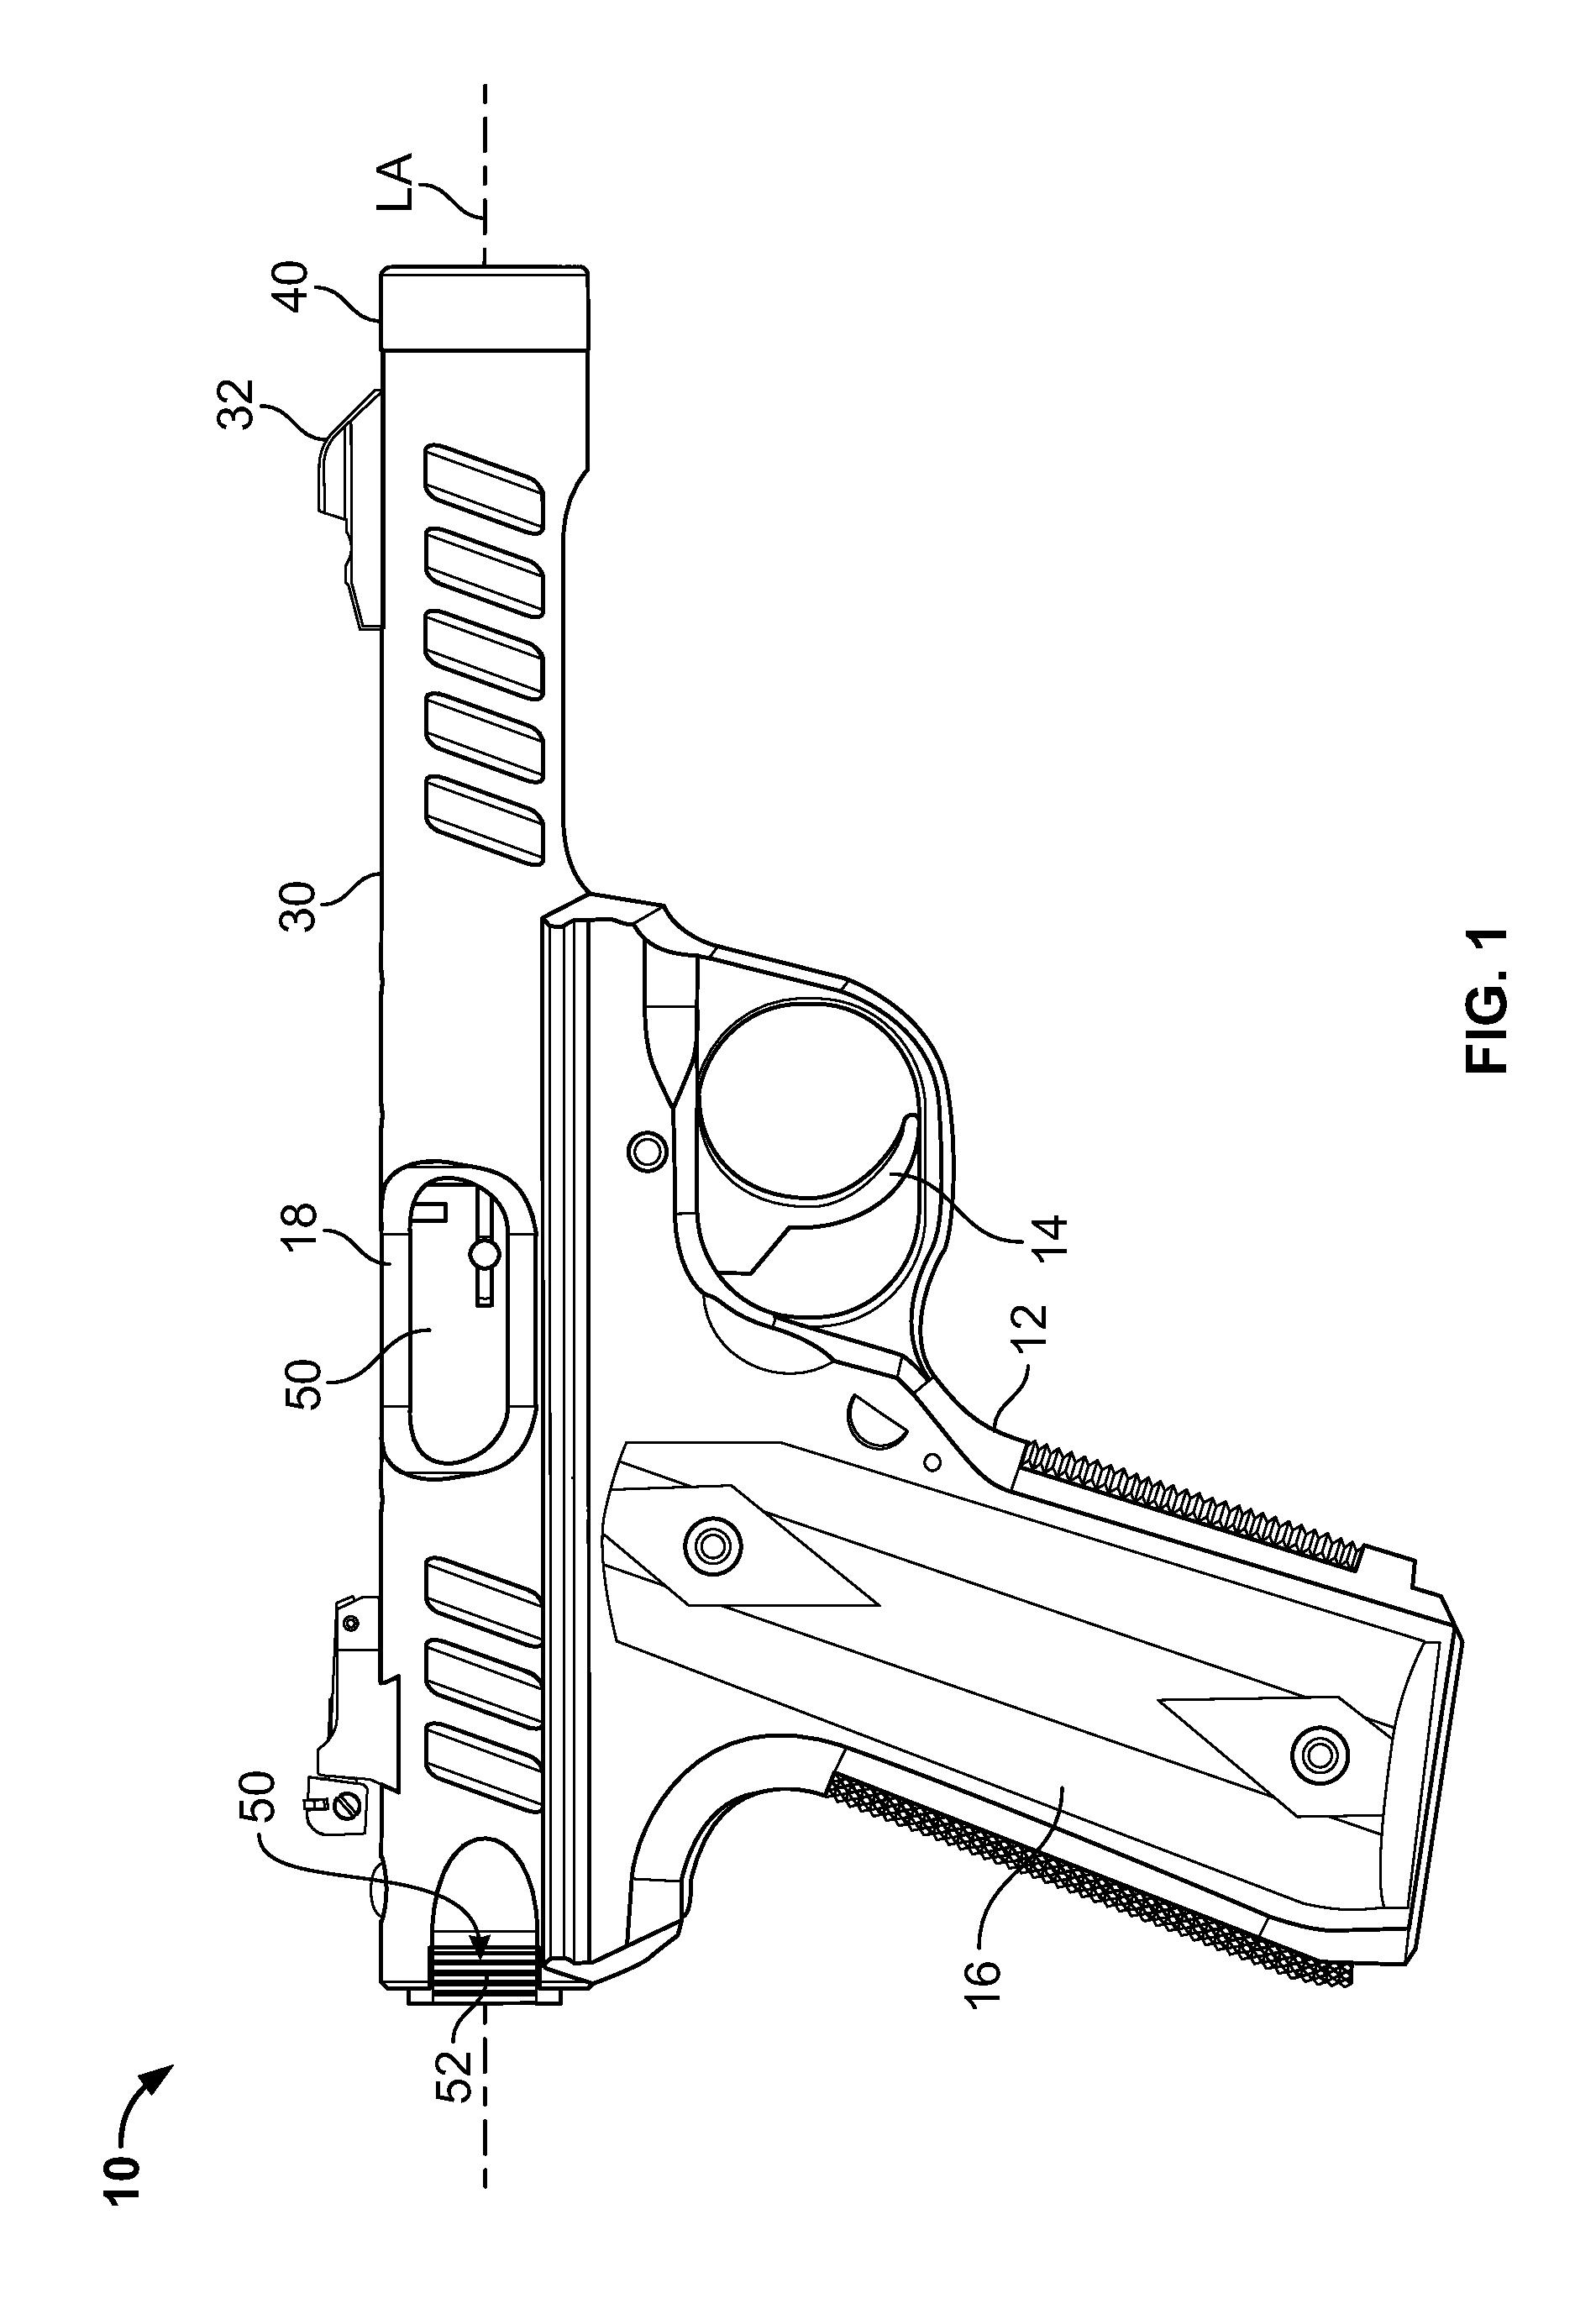 Pistol barrel system and method